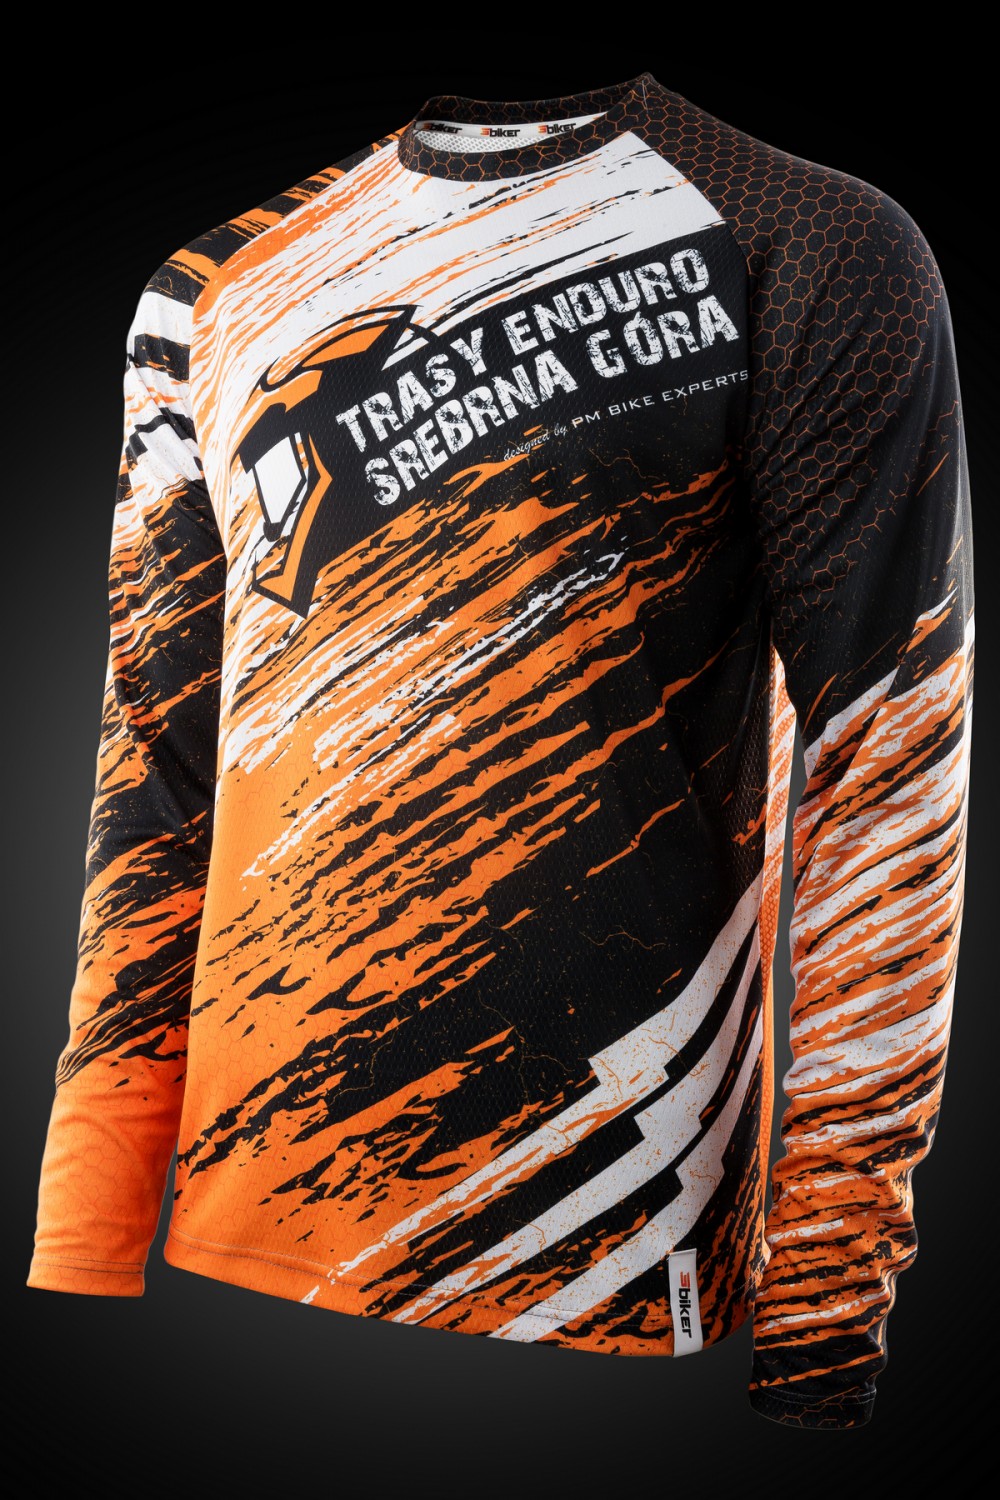 Koszulka rowerowa Trasy Enduro Srebrna Góra z podpisem Szymona Godźka